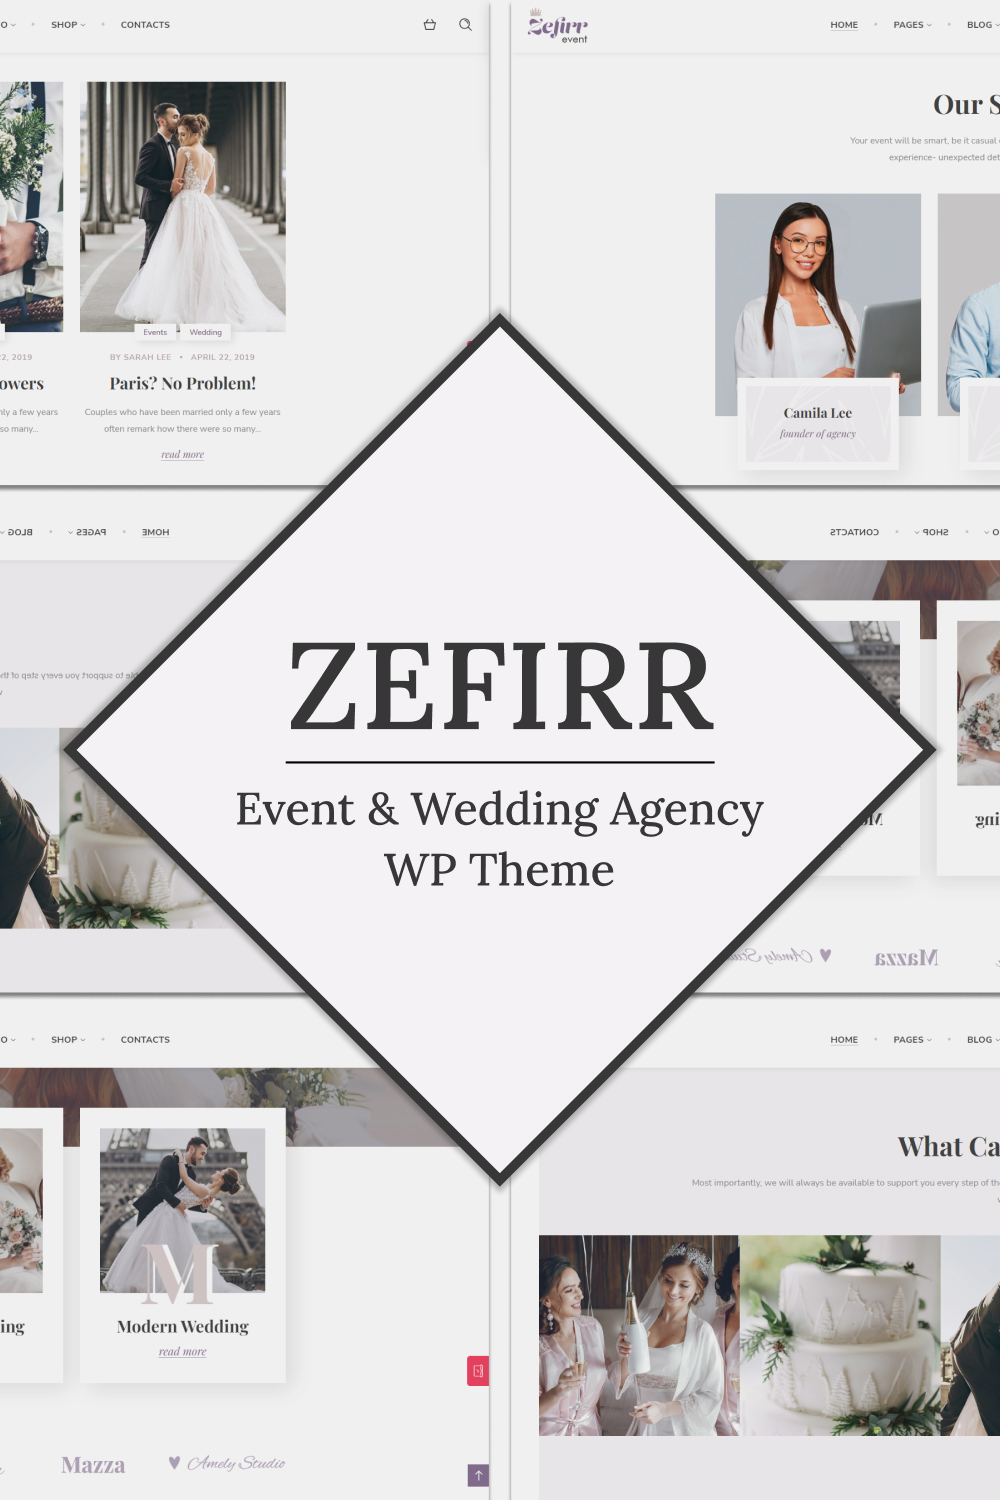 Pinterest of zefirr event wedding agency wp theme.